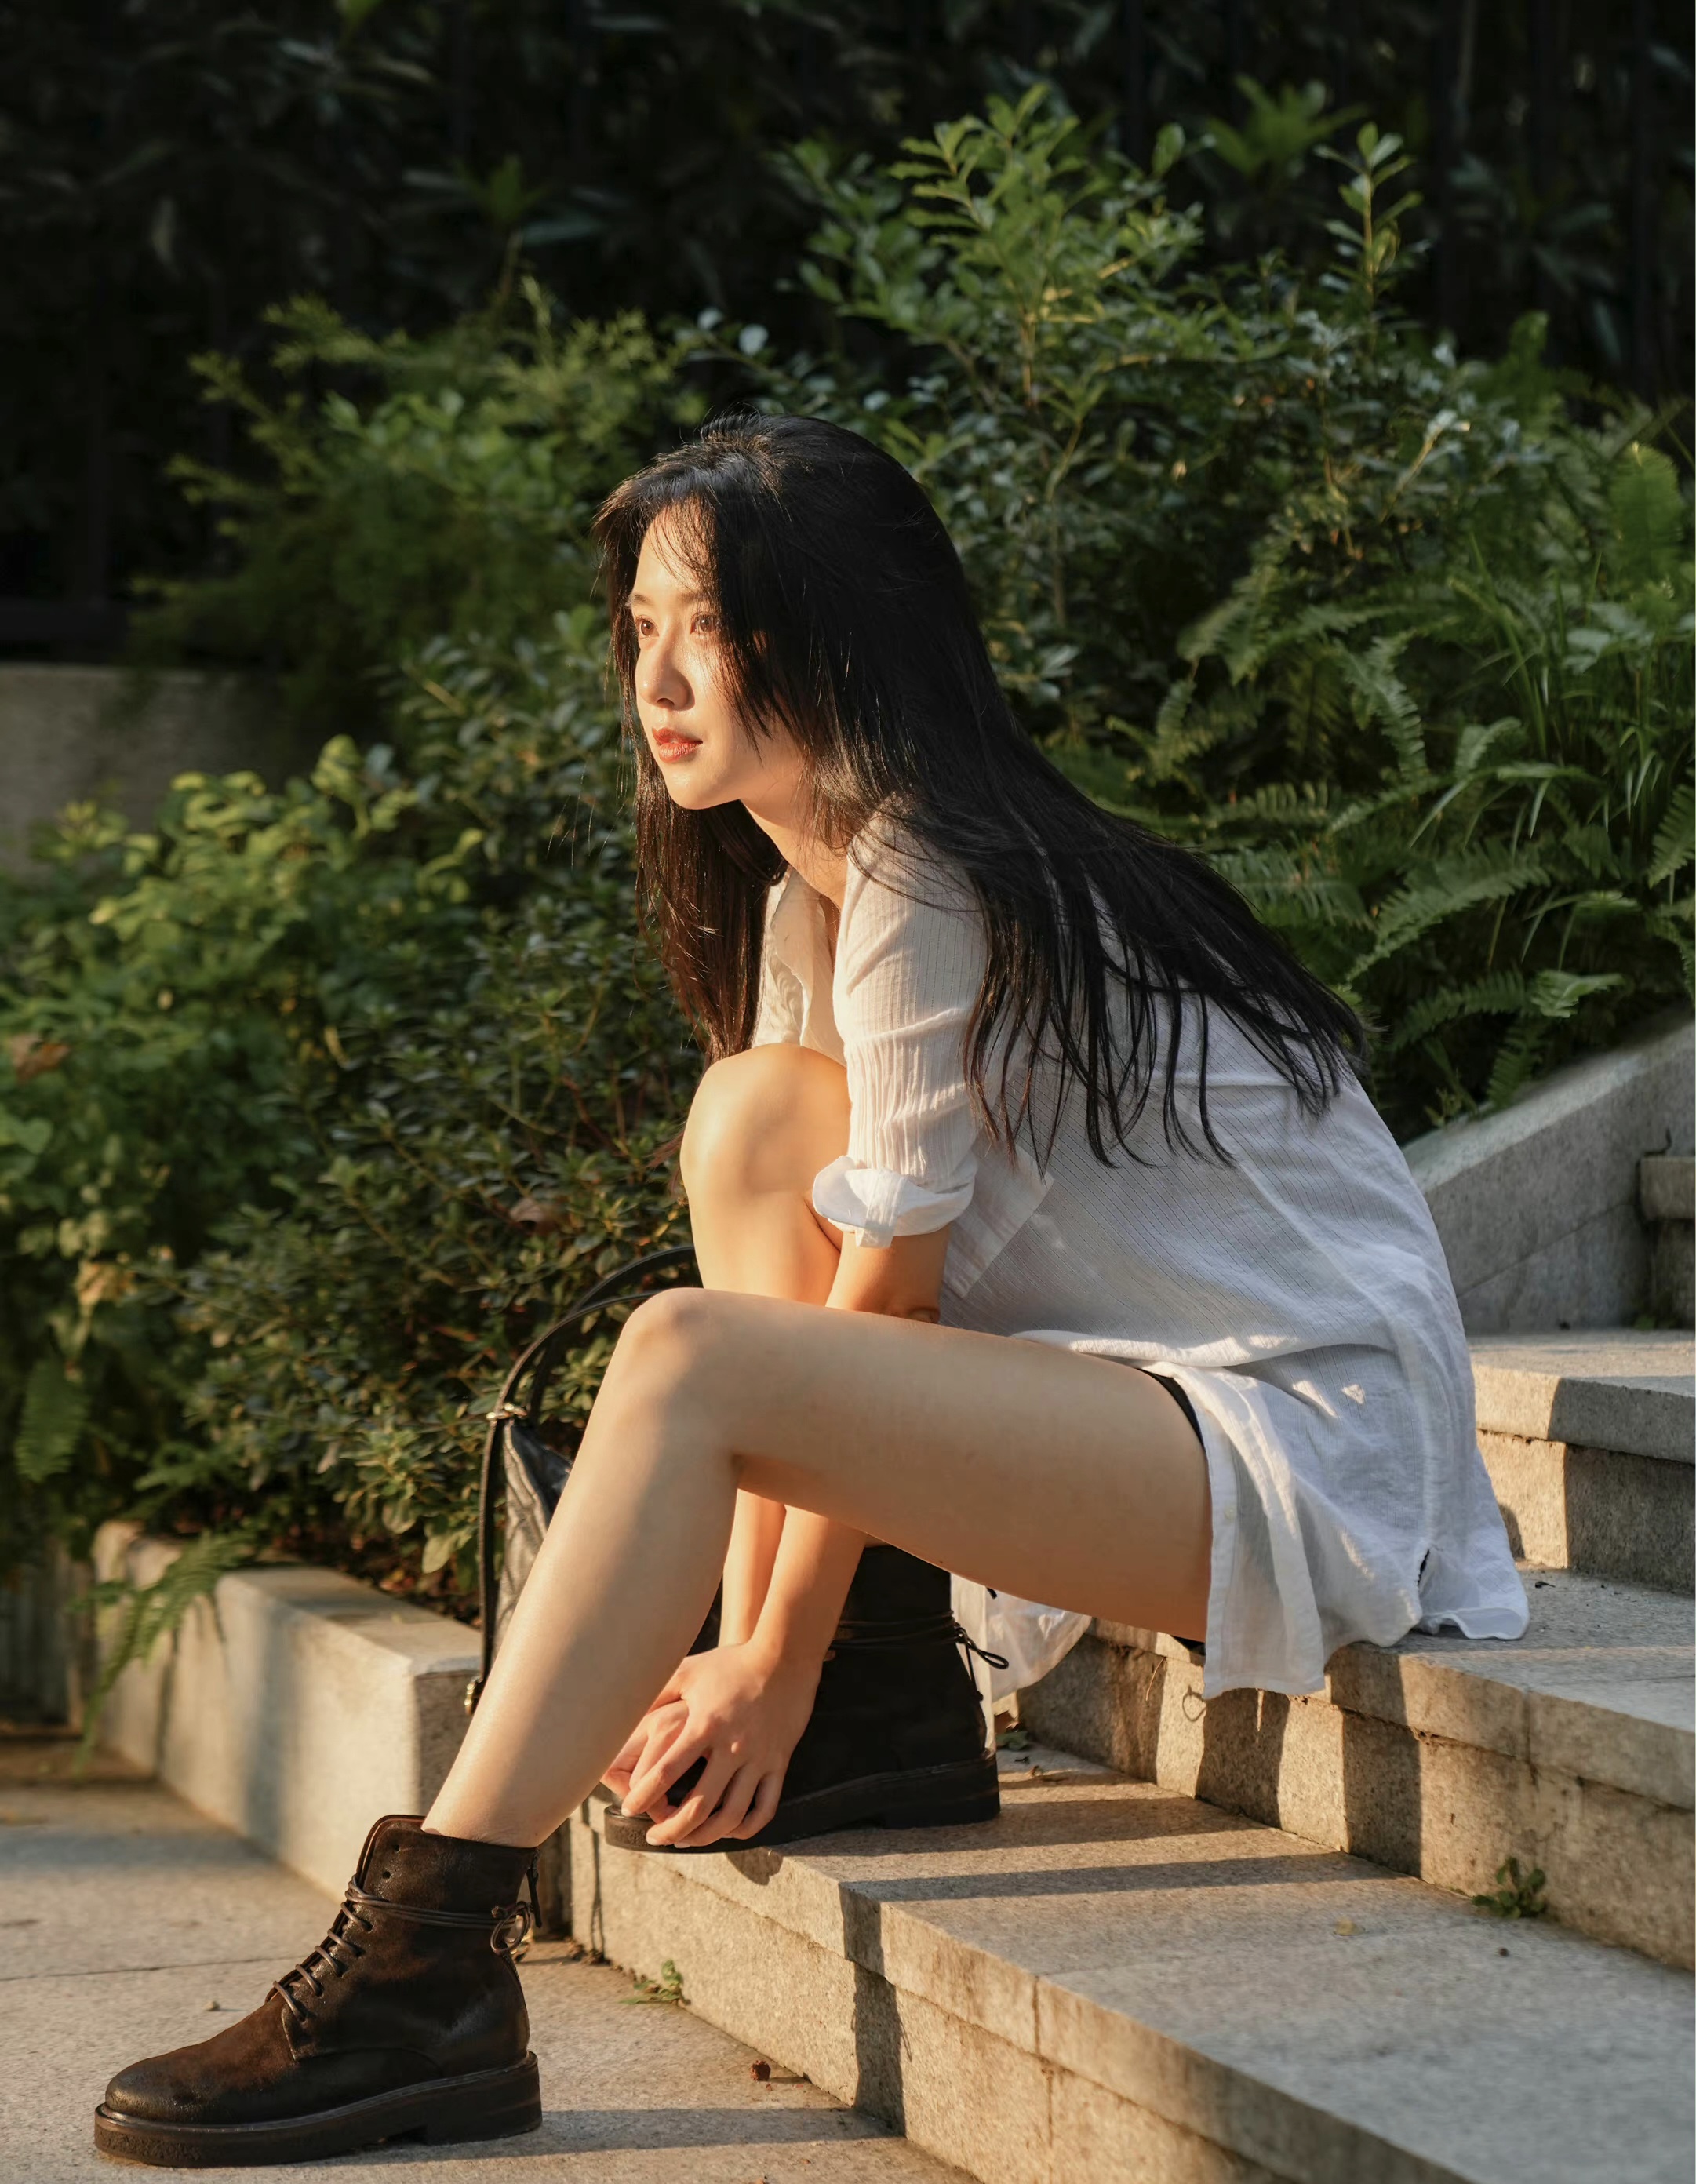 Women Asian White Clothing Boots 2162x2784